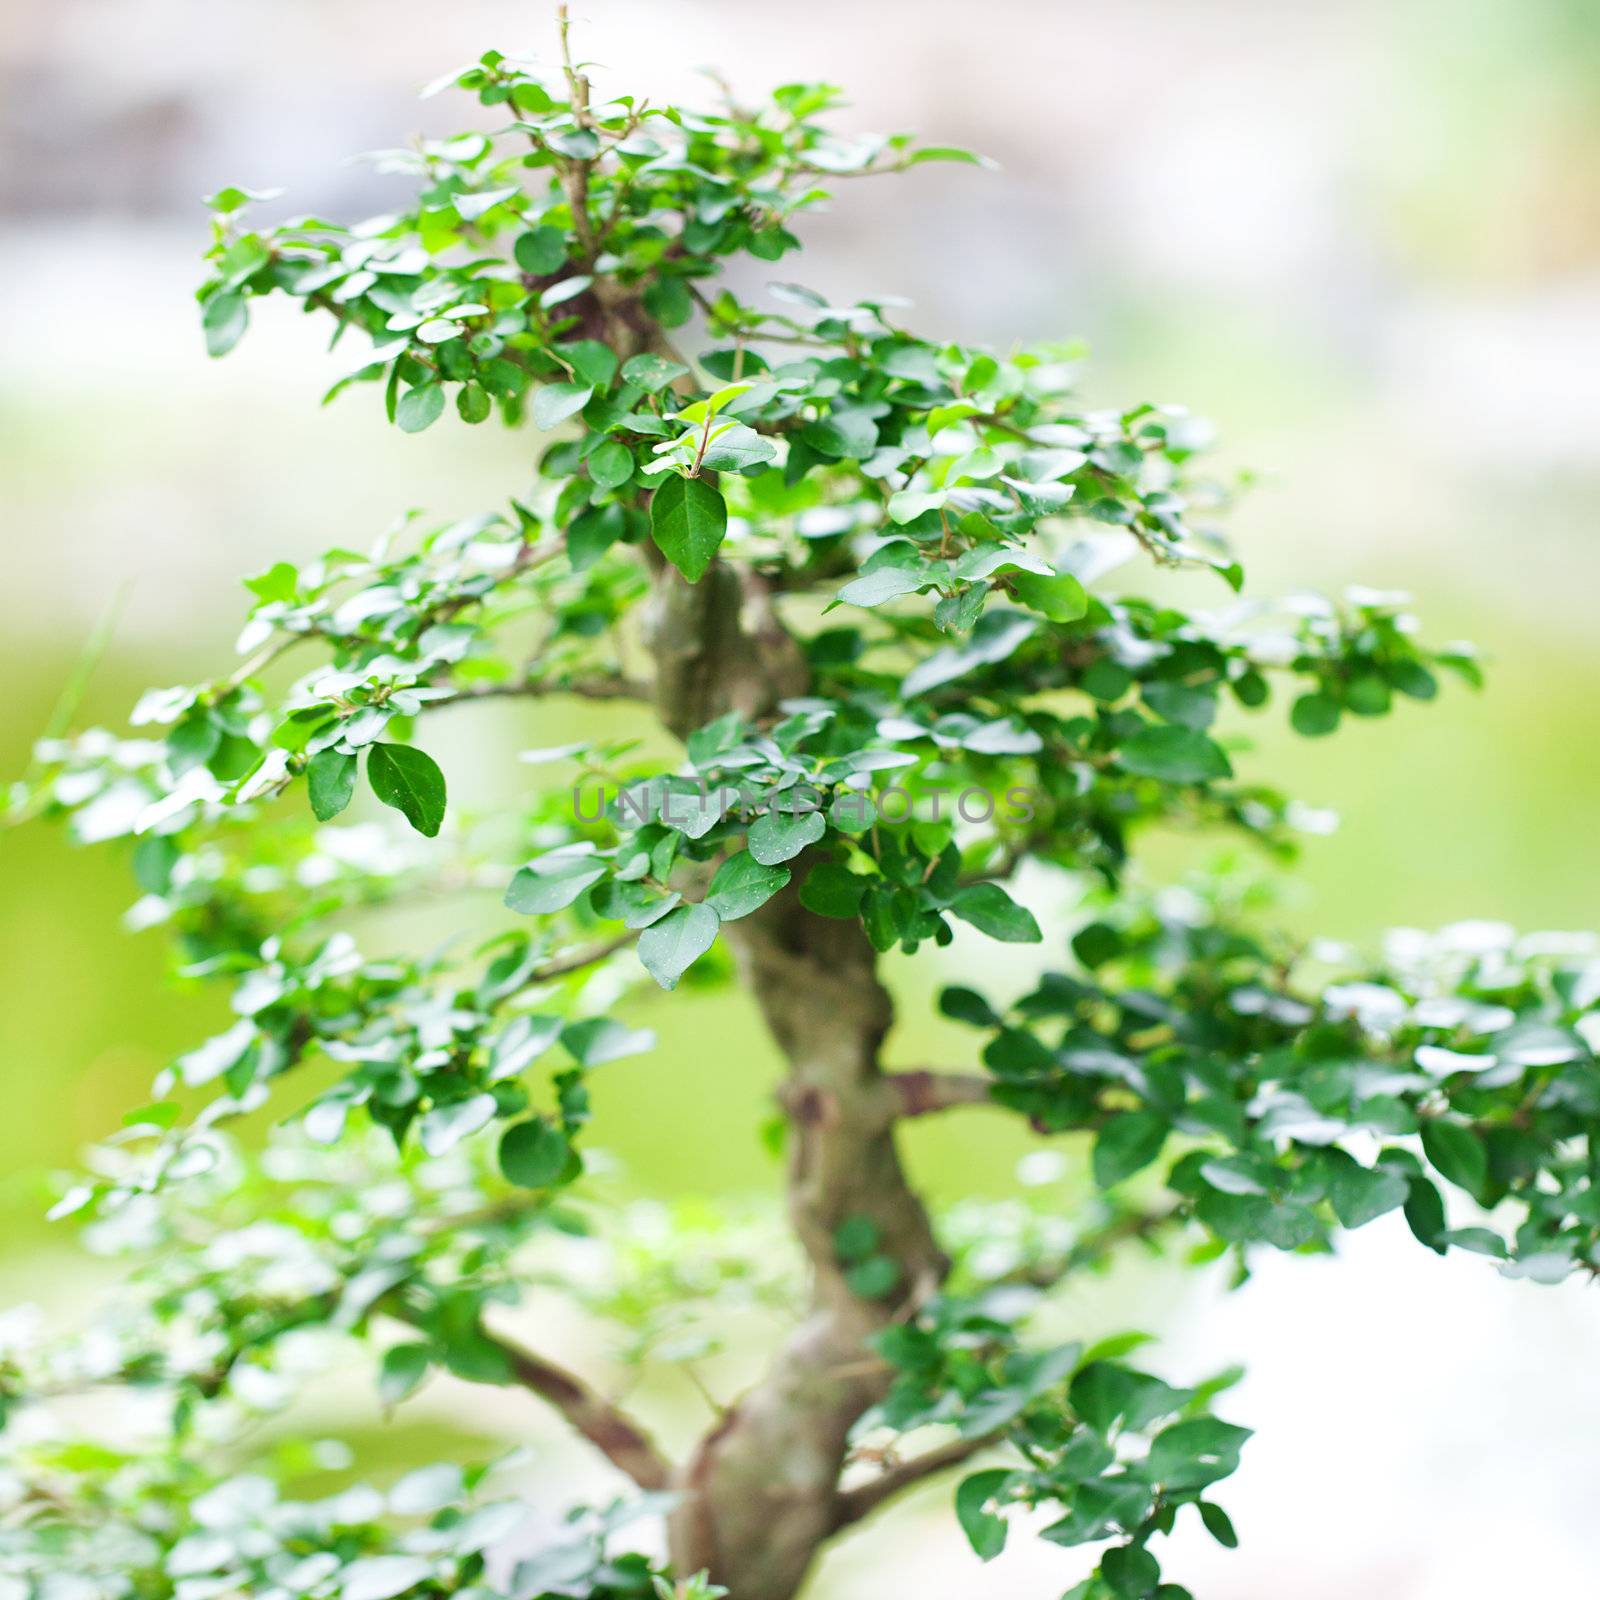 beautiful bonsai in a botanical garden by jannyjus